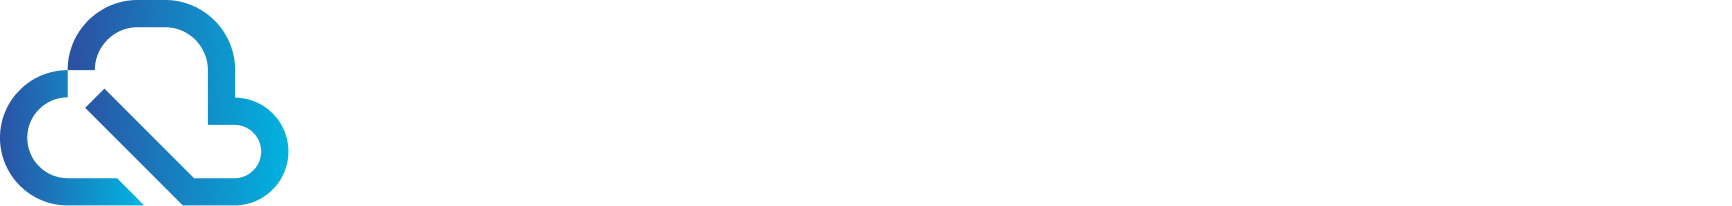 bankers-white-logo